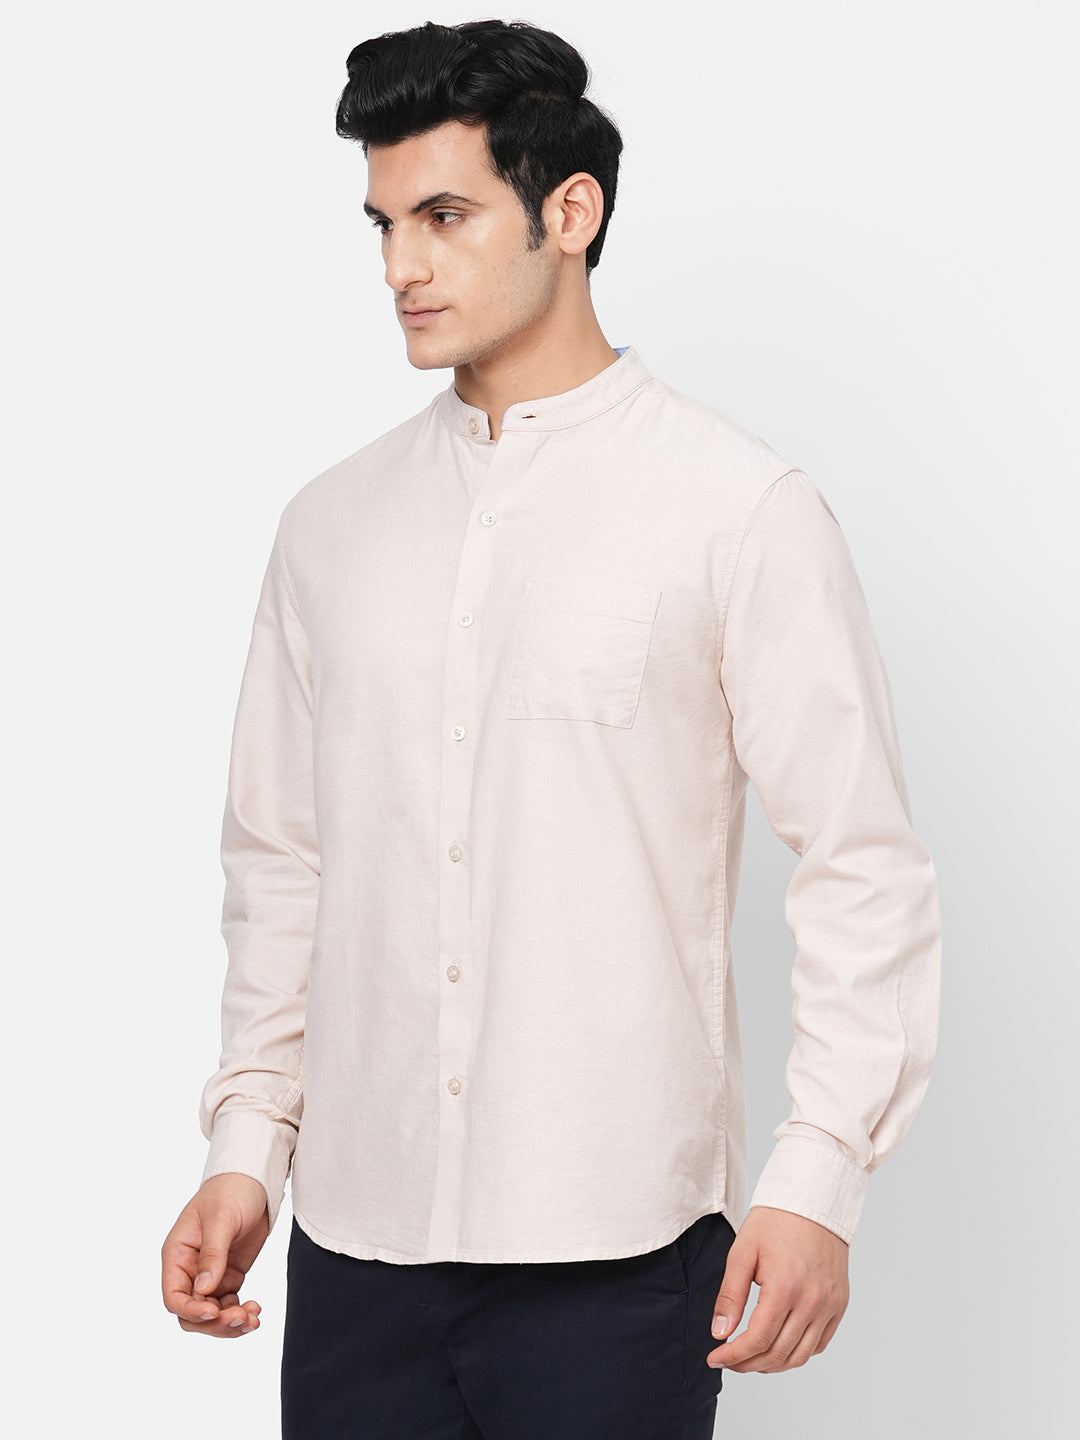 Men's Oxford Cotton Band Collar Long Sleeved Shirt - Khaki